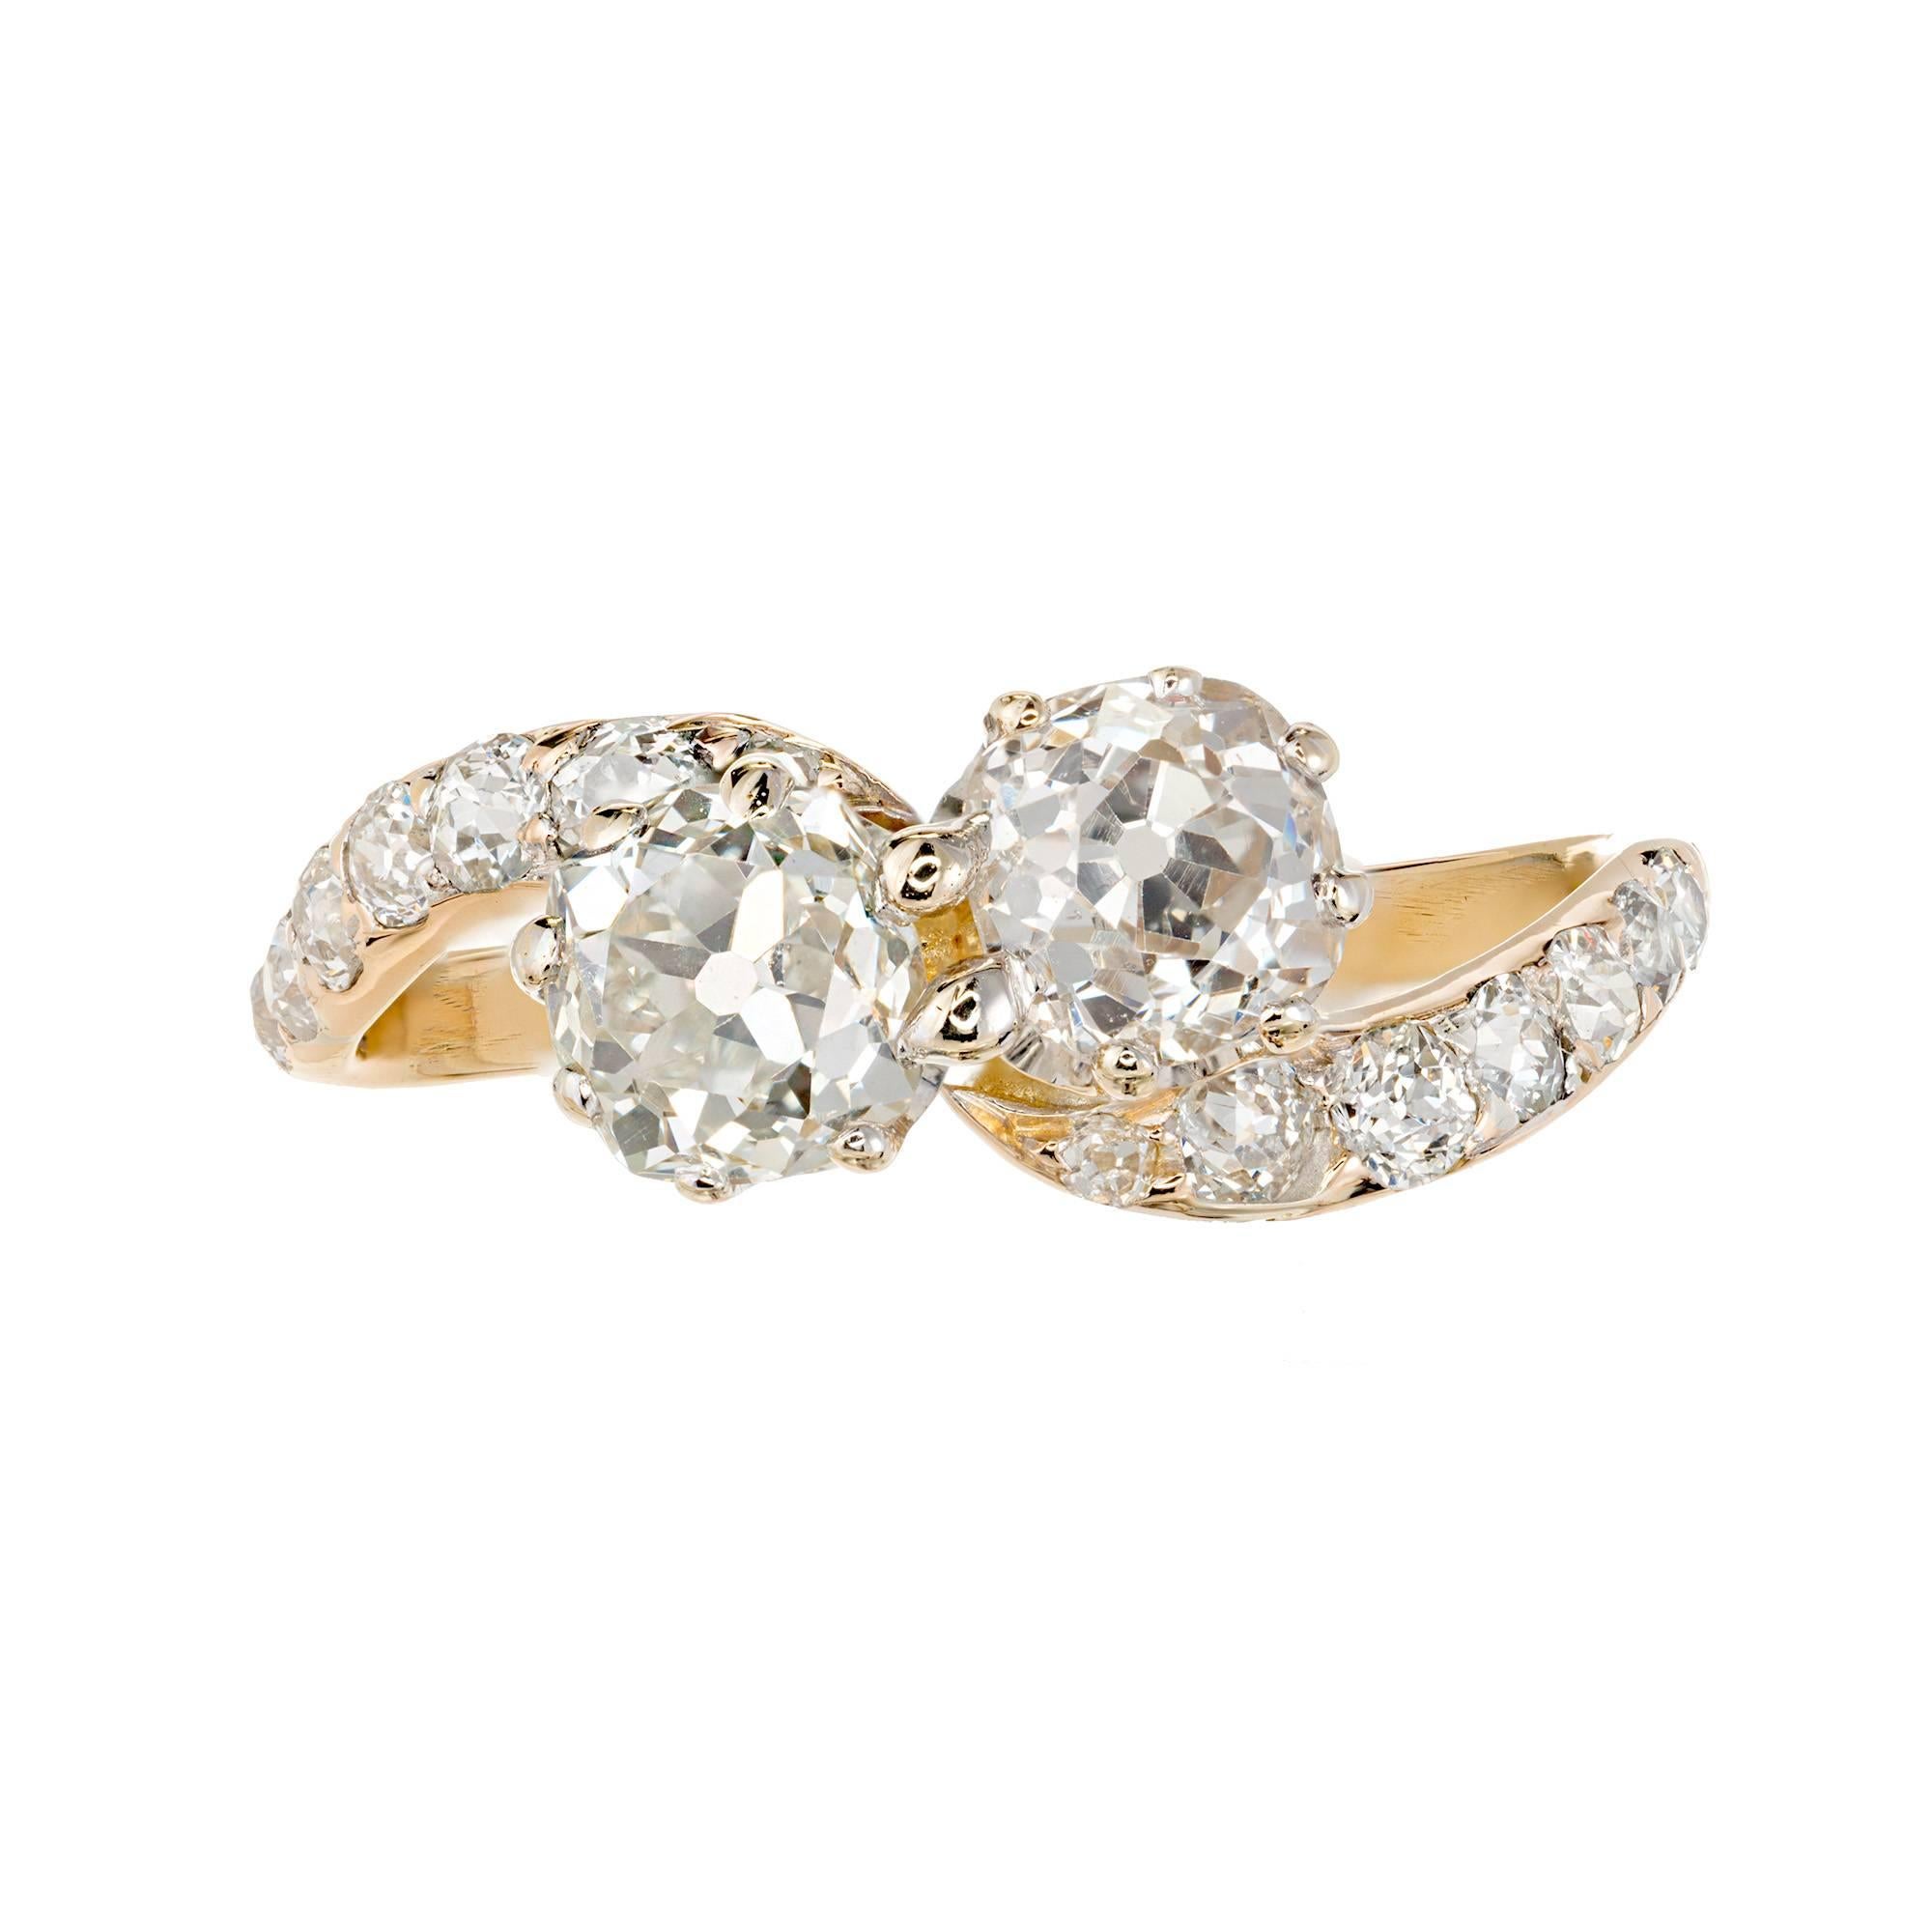 1.01 Carat Double Diamond Gold Art Deco Bypass Engagement Ring